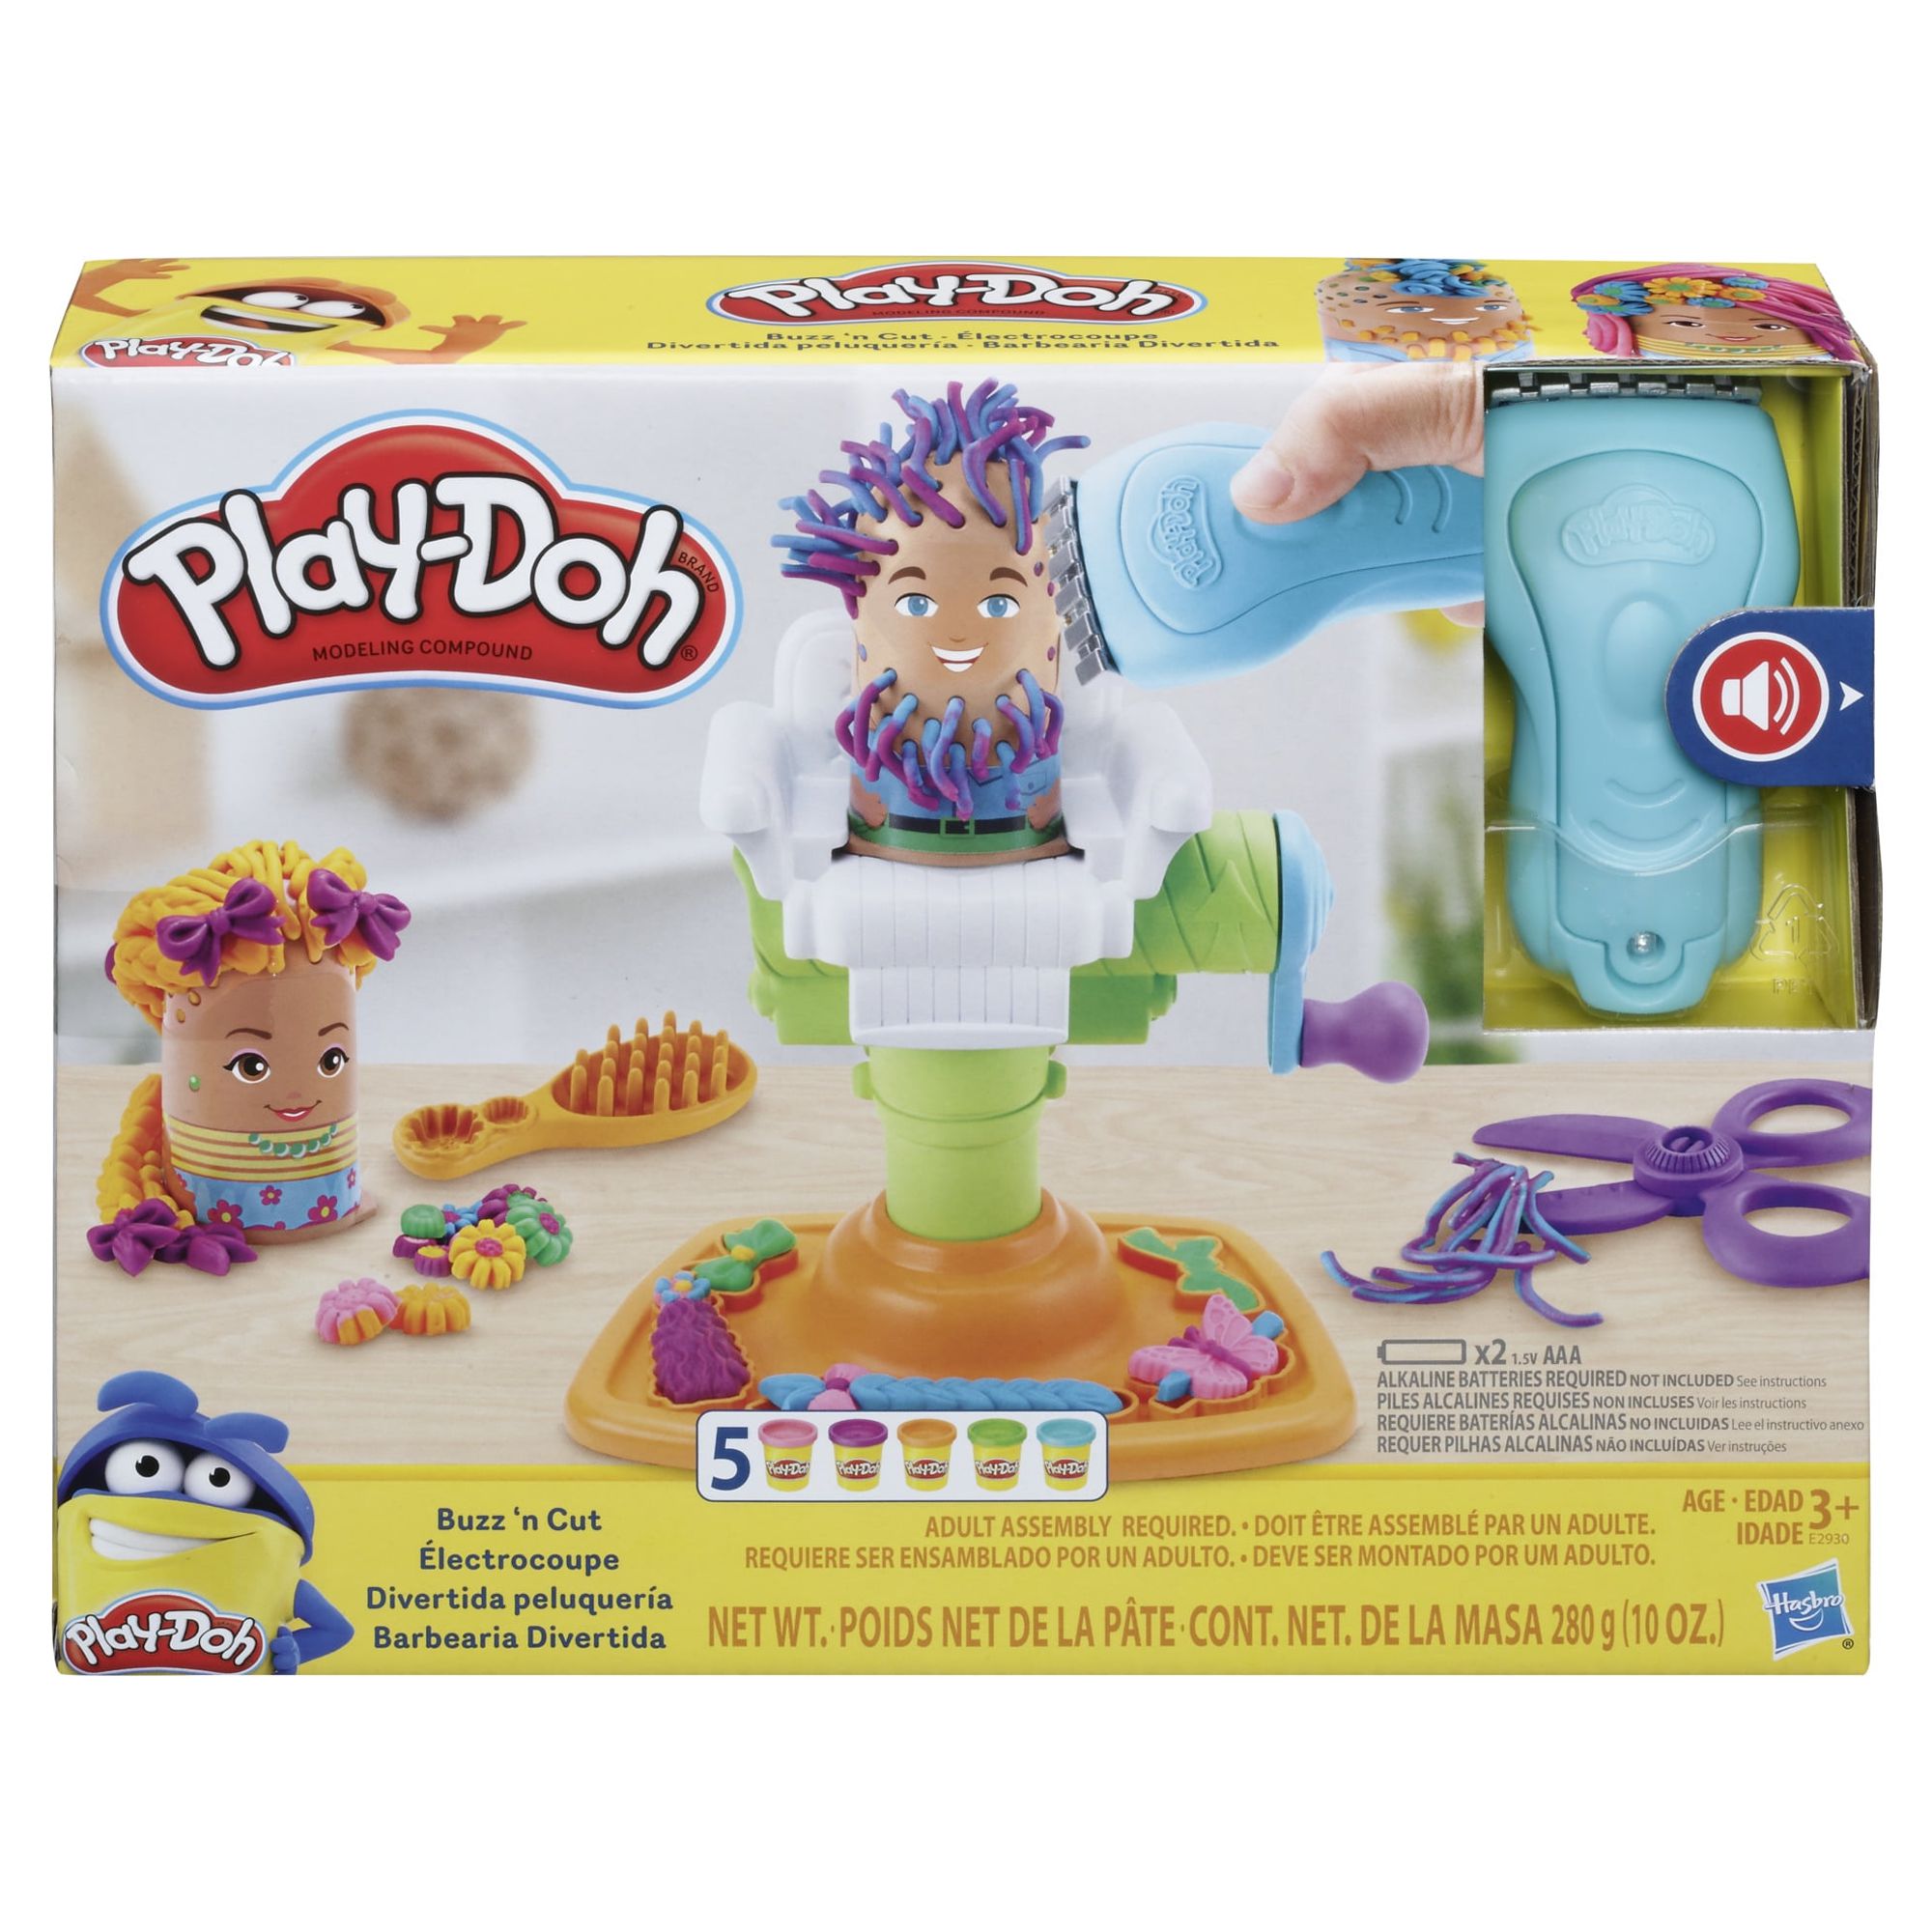 Play-Doh Buzz 'n Cut Barber Shop Set - image 3 of 5